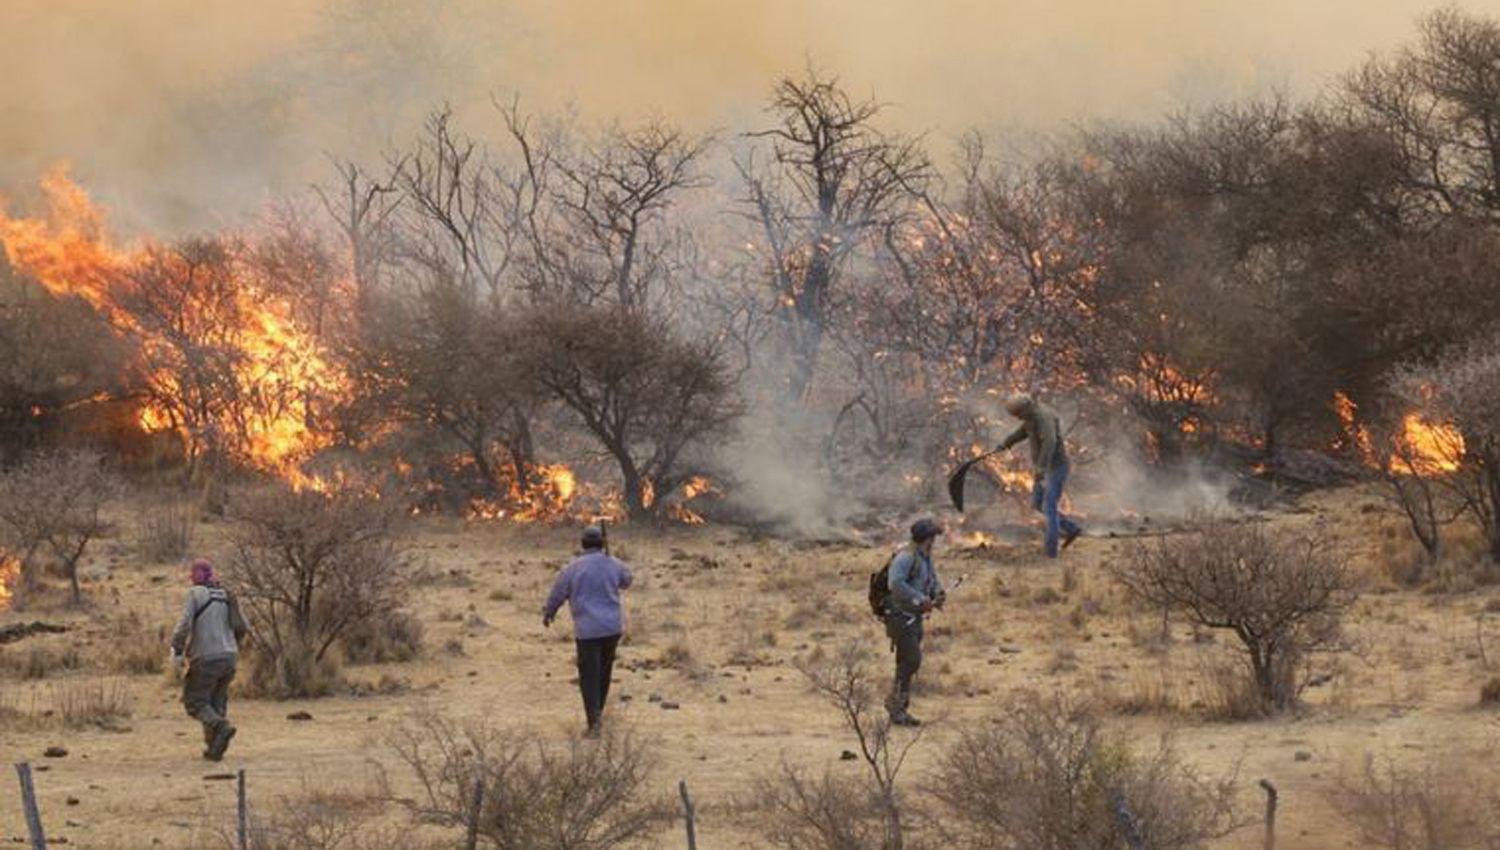 Continuacutea la lucha contra muacuteltiples incendios forestales en Coacuterdoba